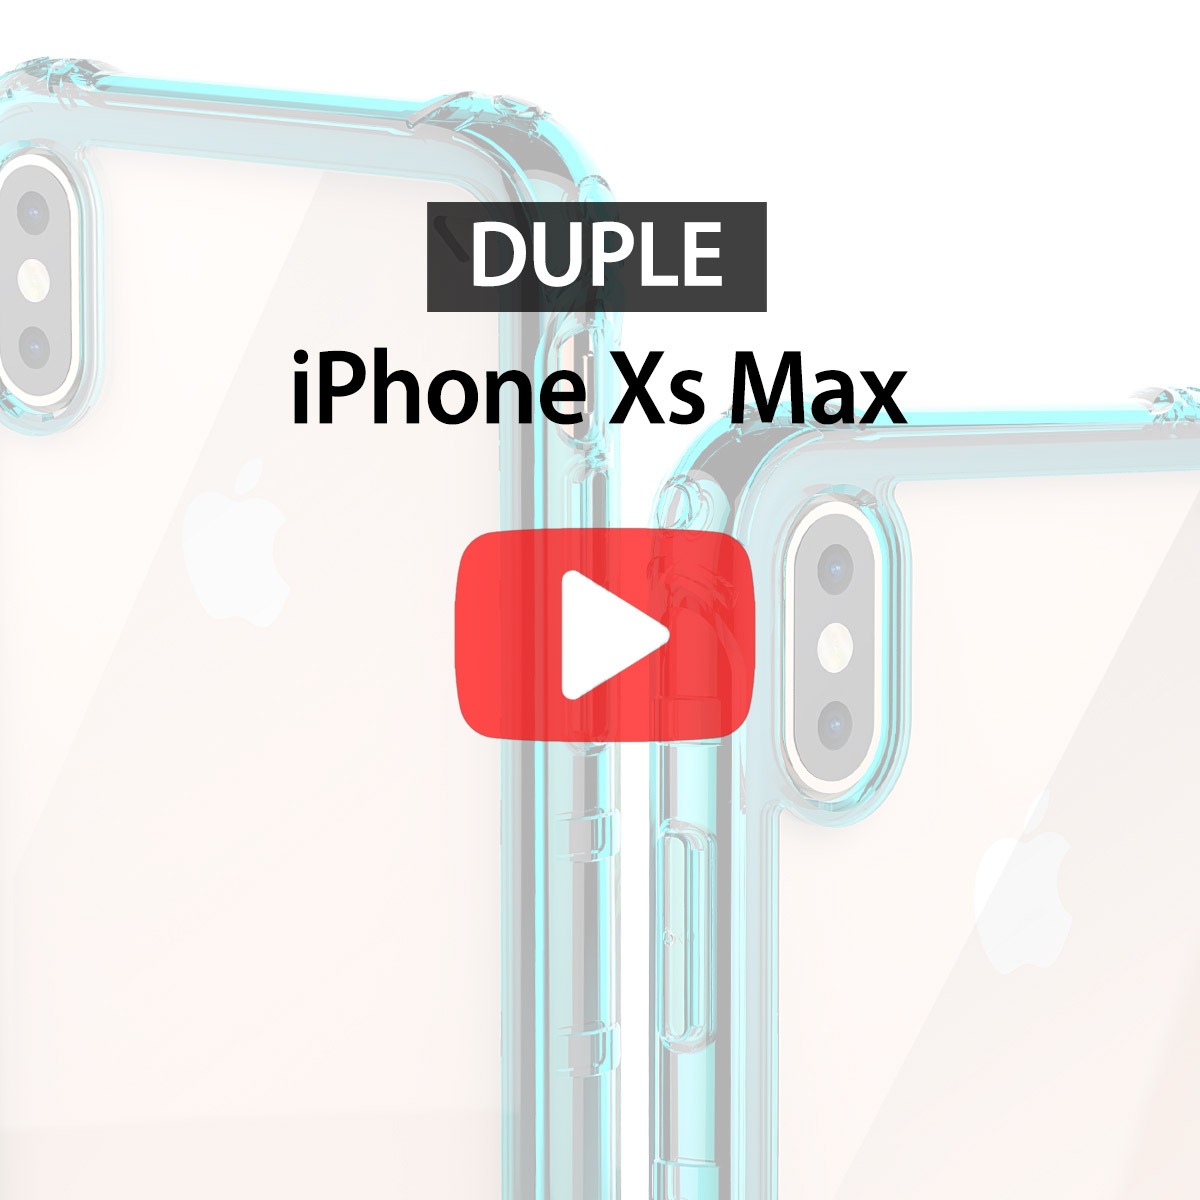 [araree] iPhone Xs Max case Duple unboxing